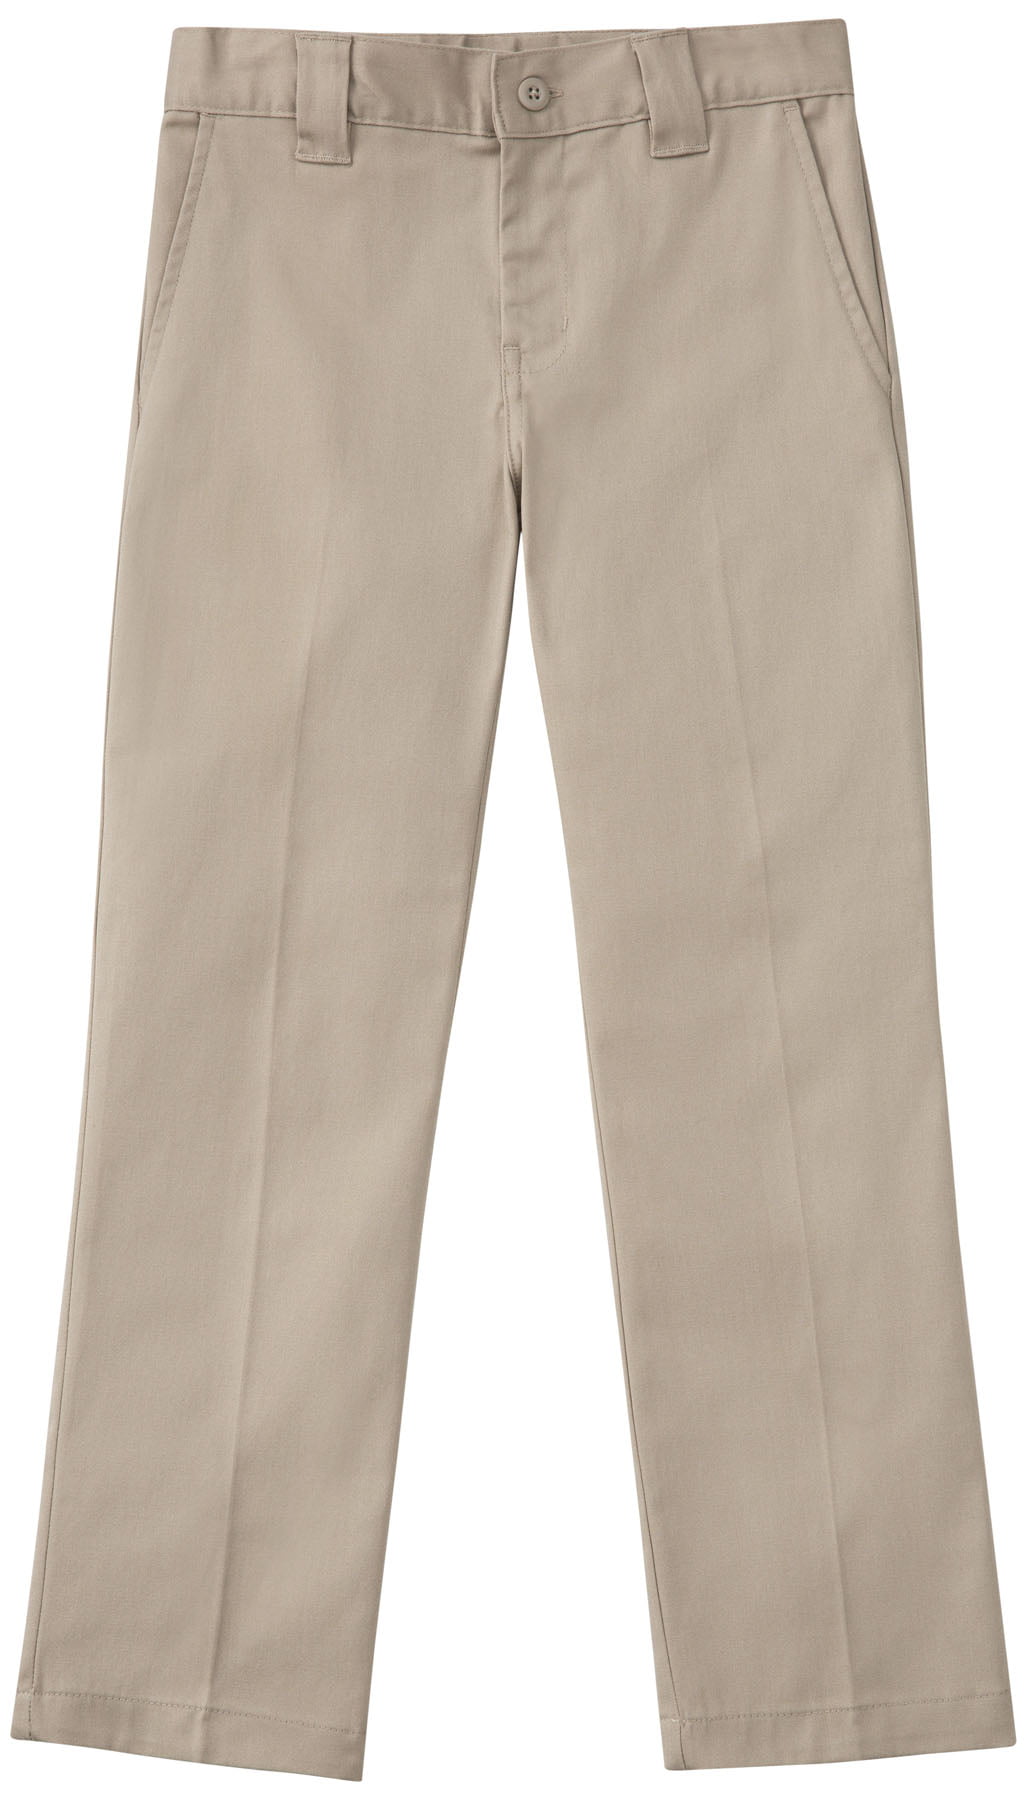 CLASSROOM Boys' Uniform Flat Front Pant with Adjustable Waist 